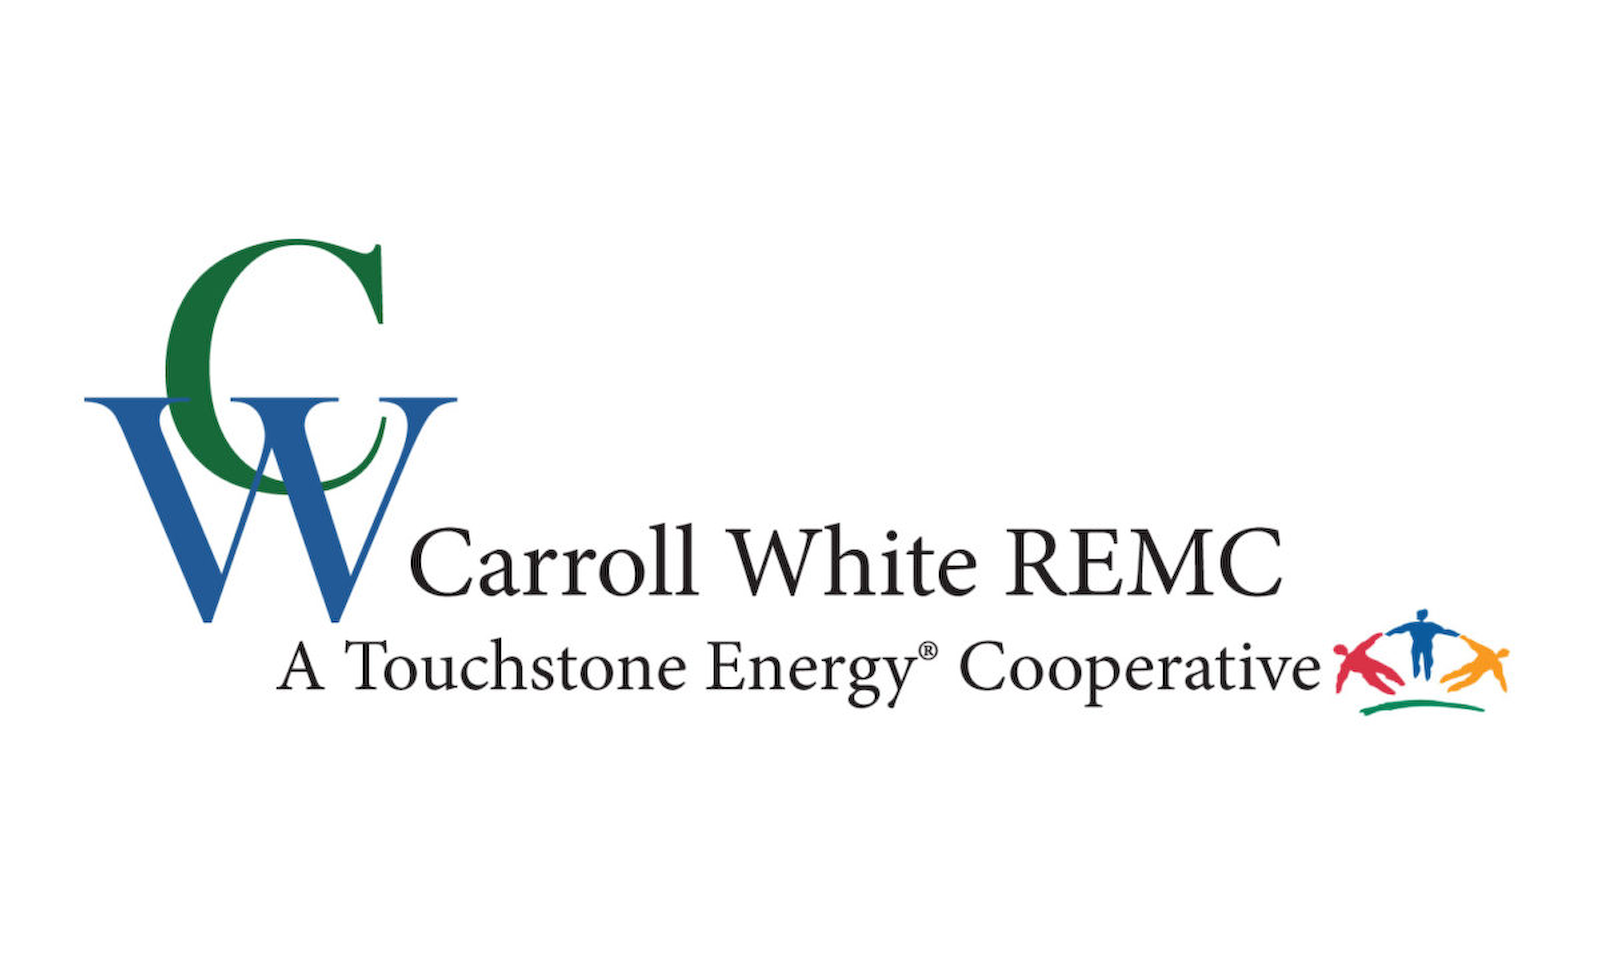 Carroll White REMC